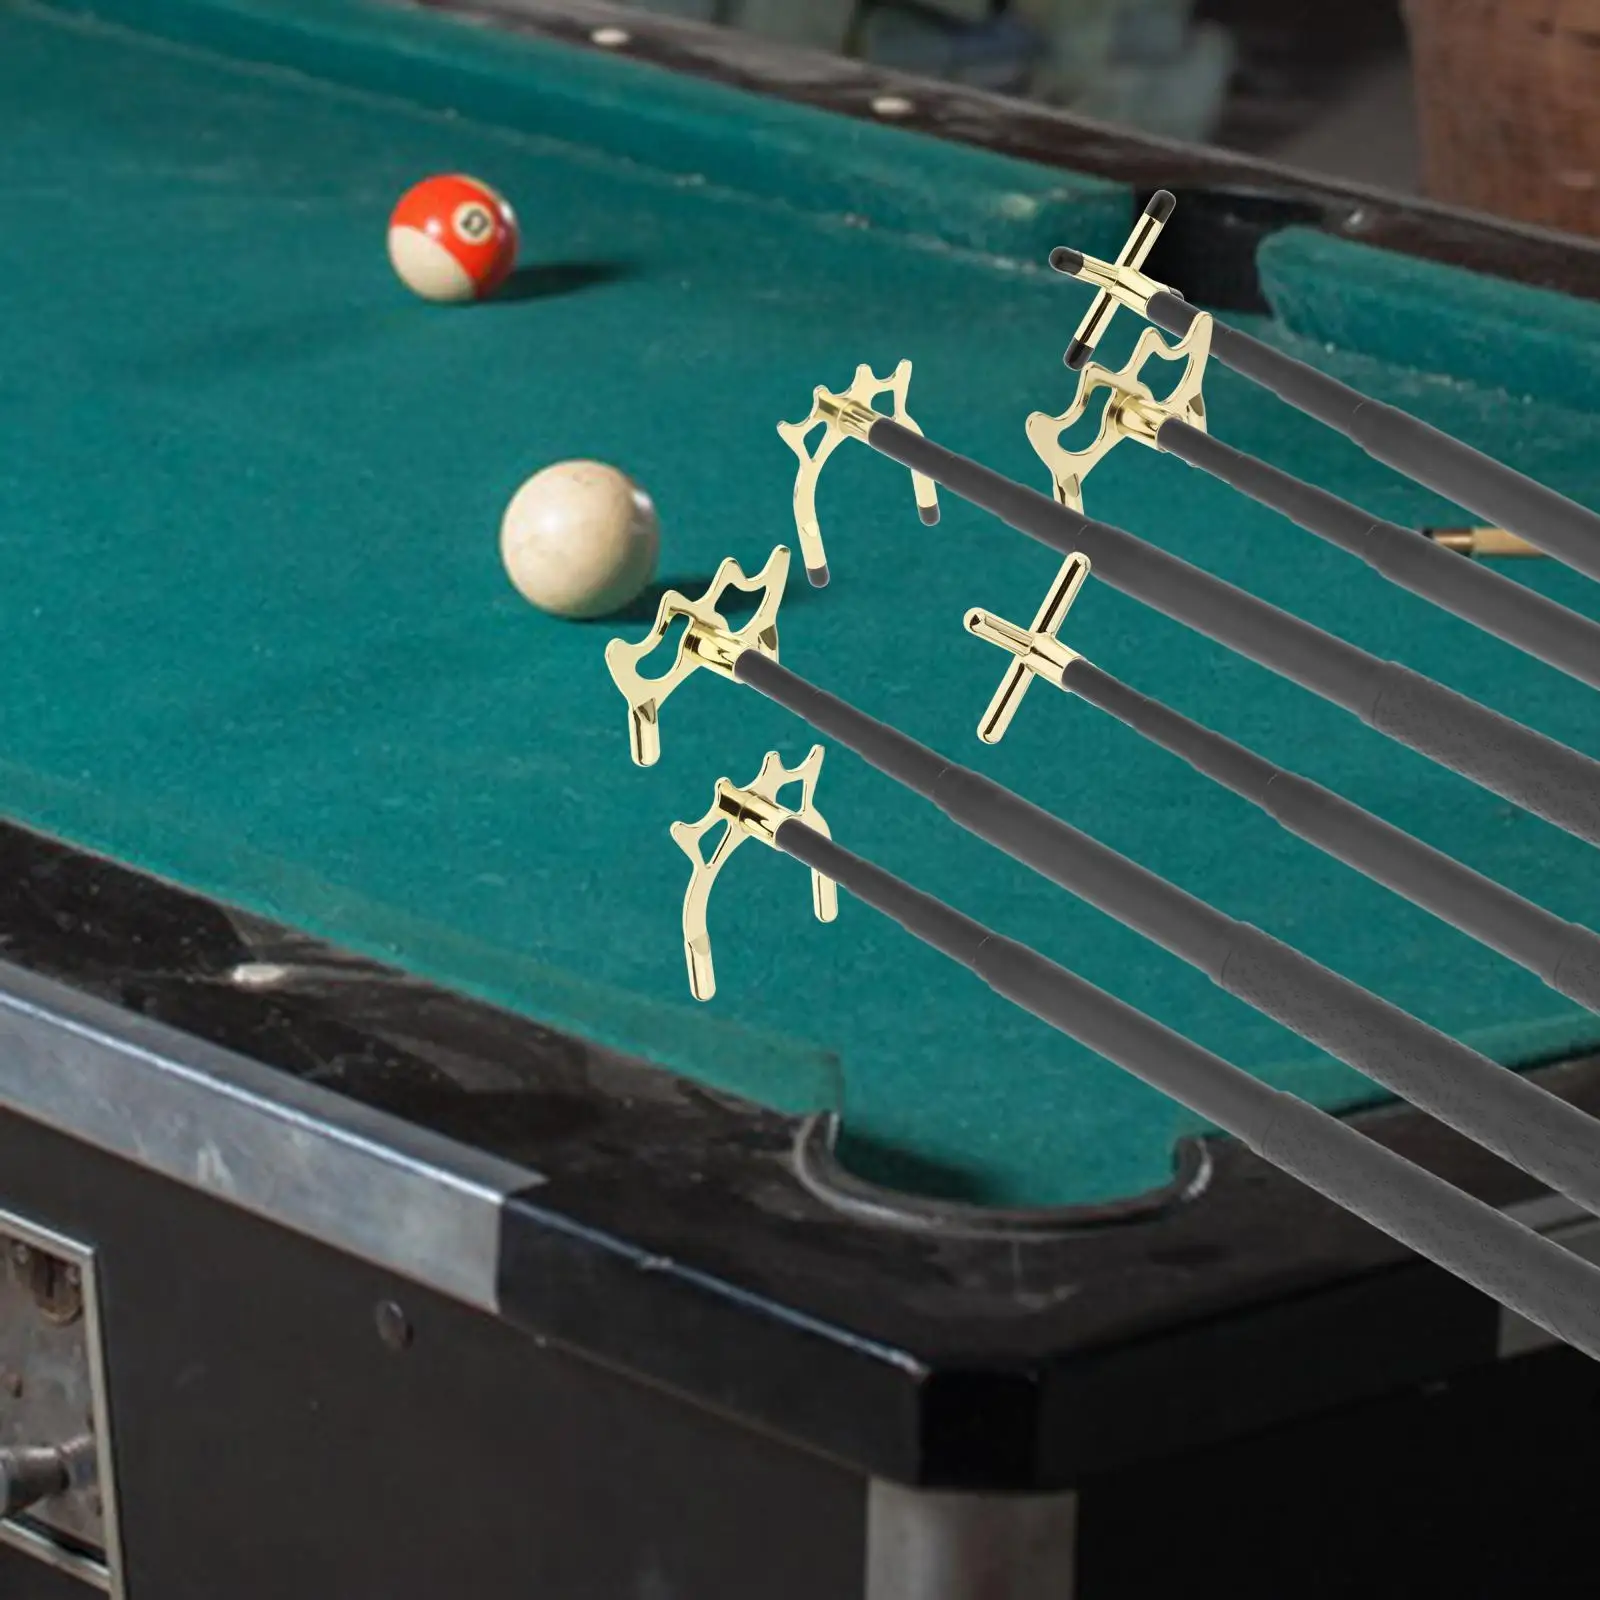 Retractable Billiards Cue Stick Bridge for Pool Table Practice Competition